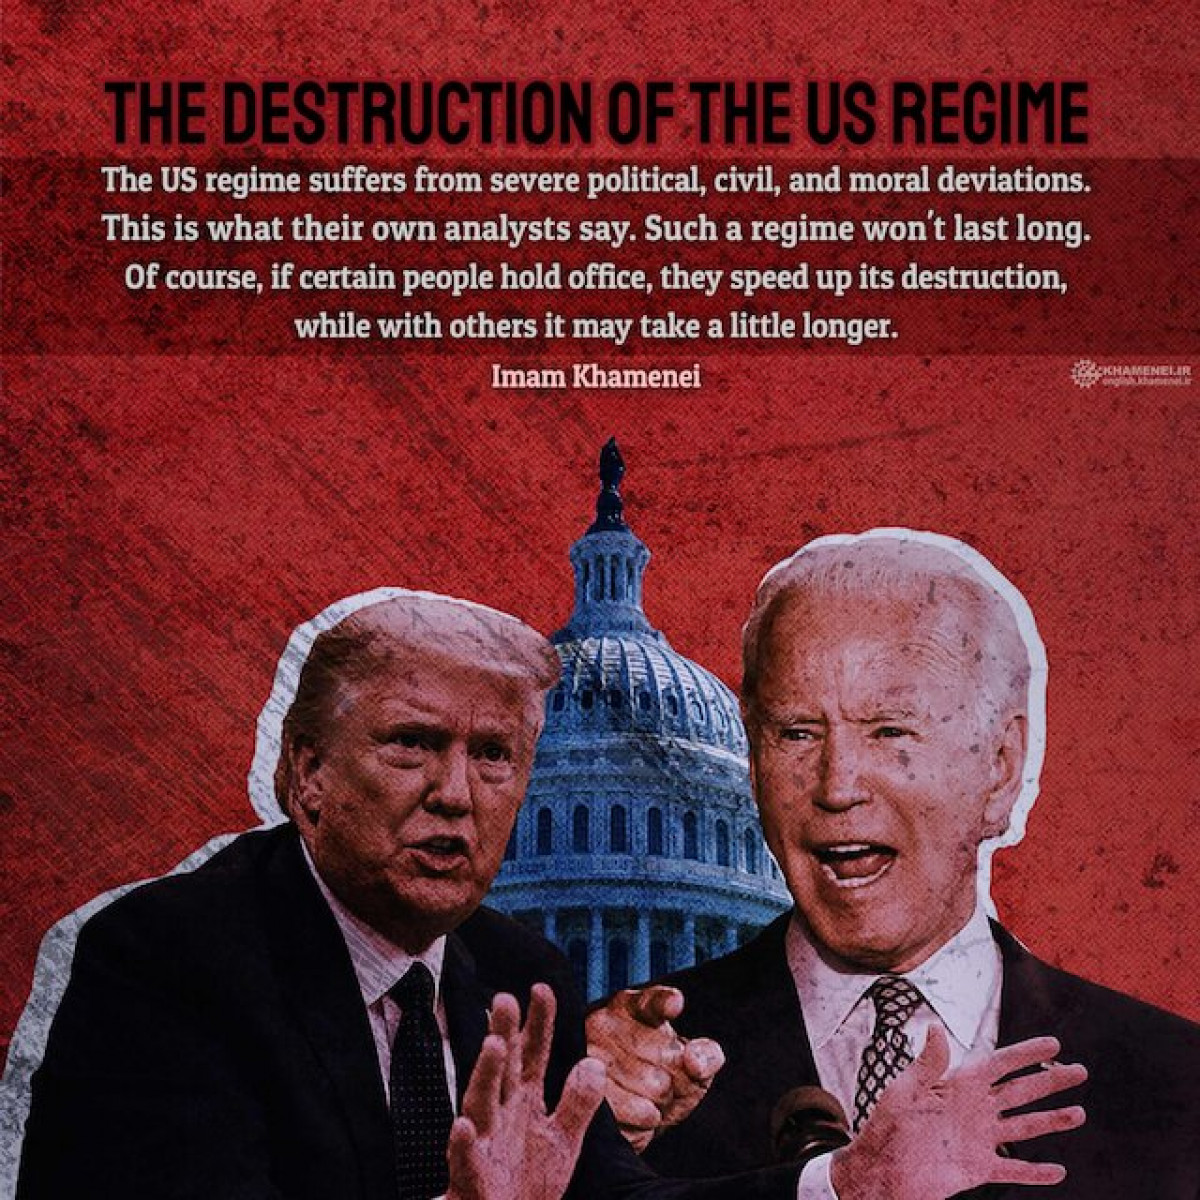 The destruction of the US regime